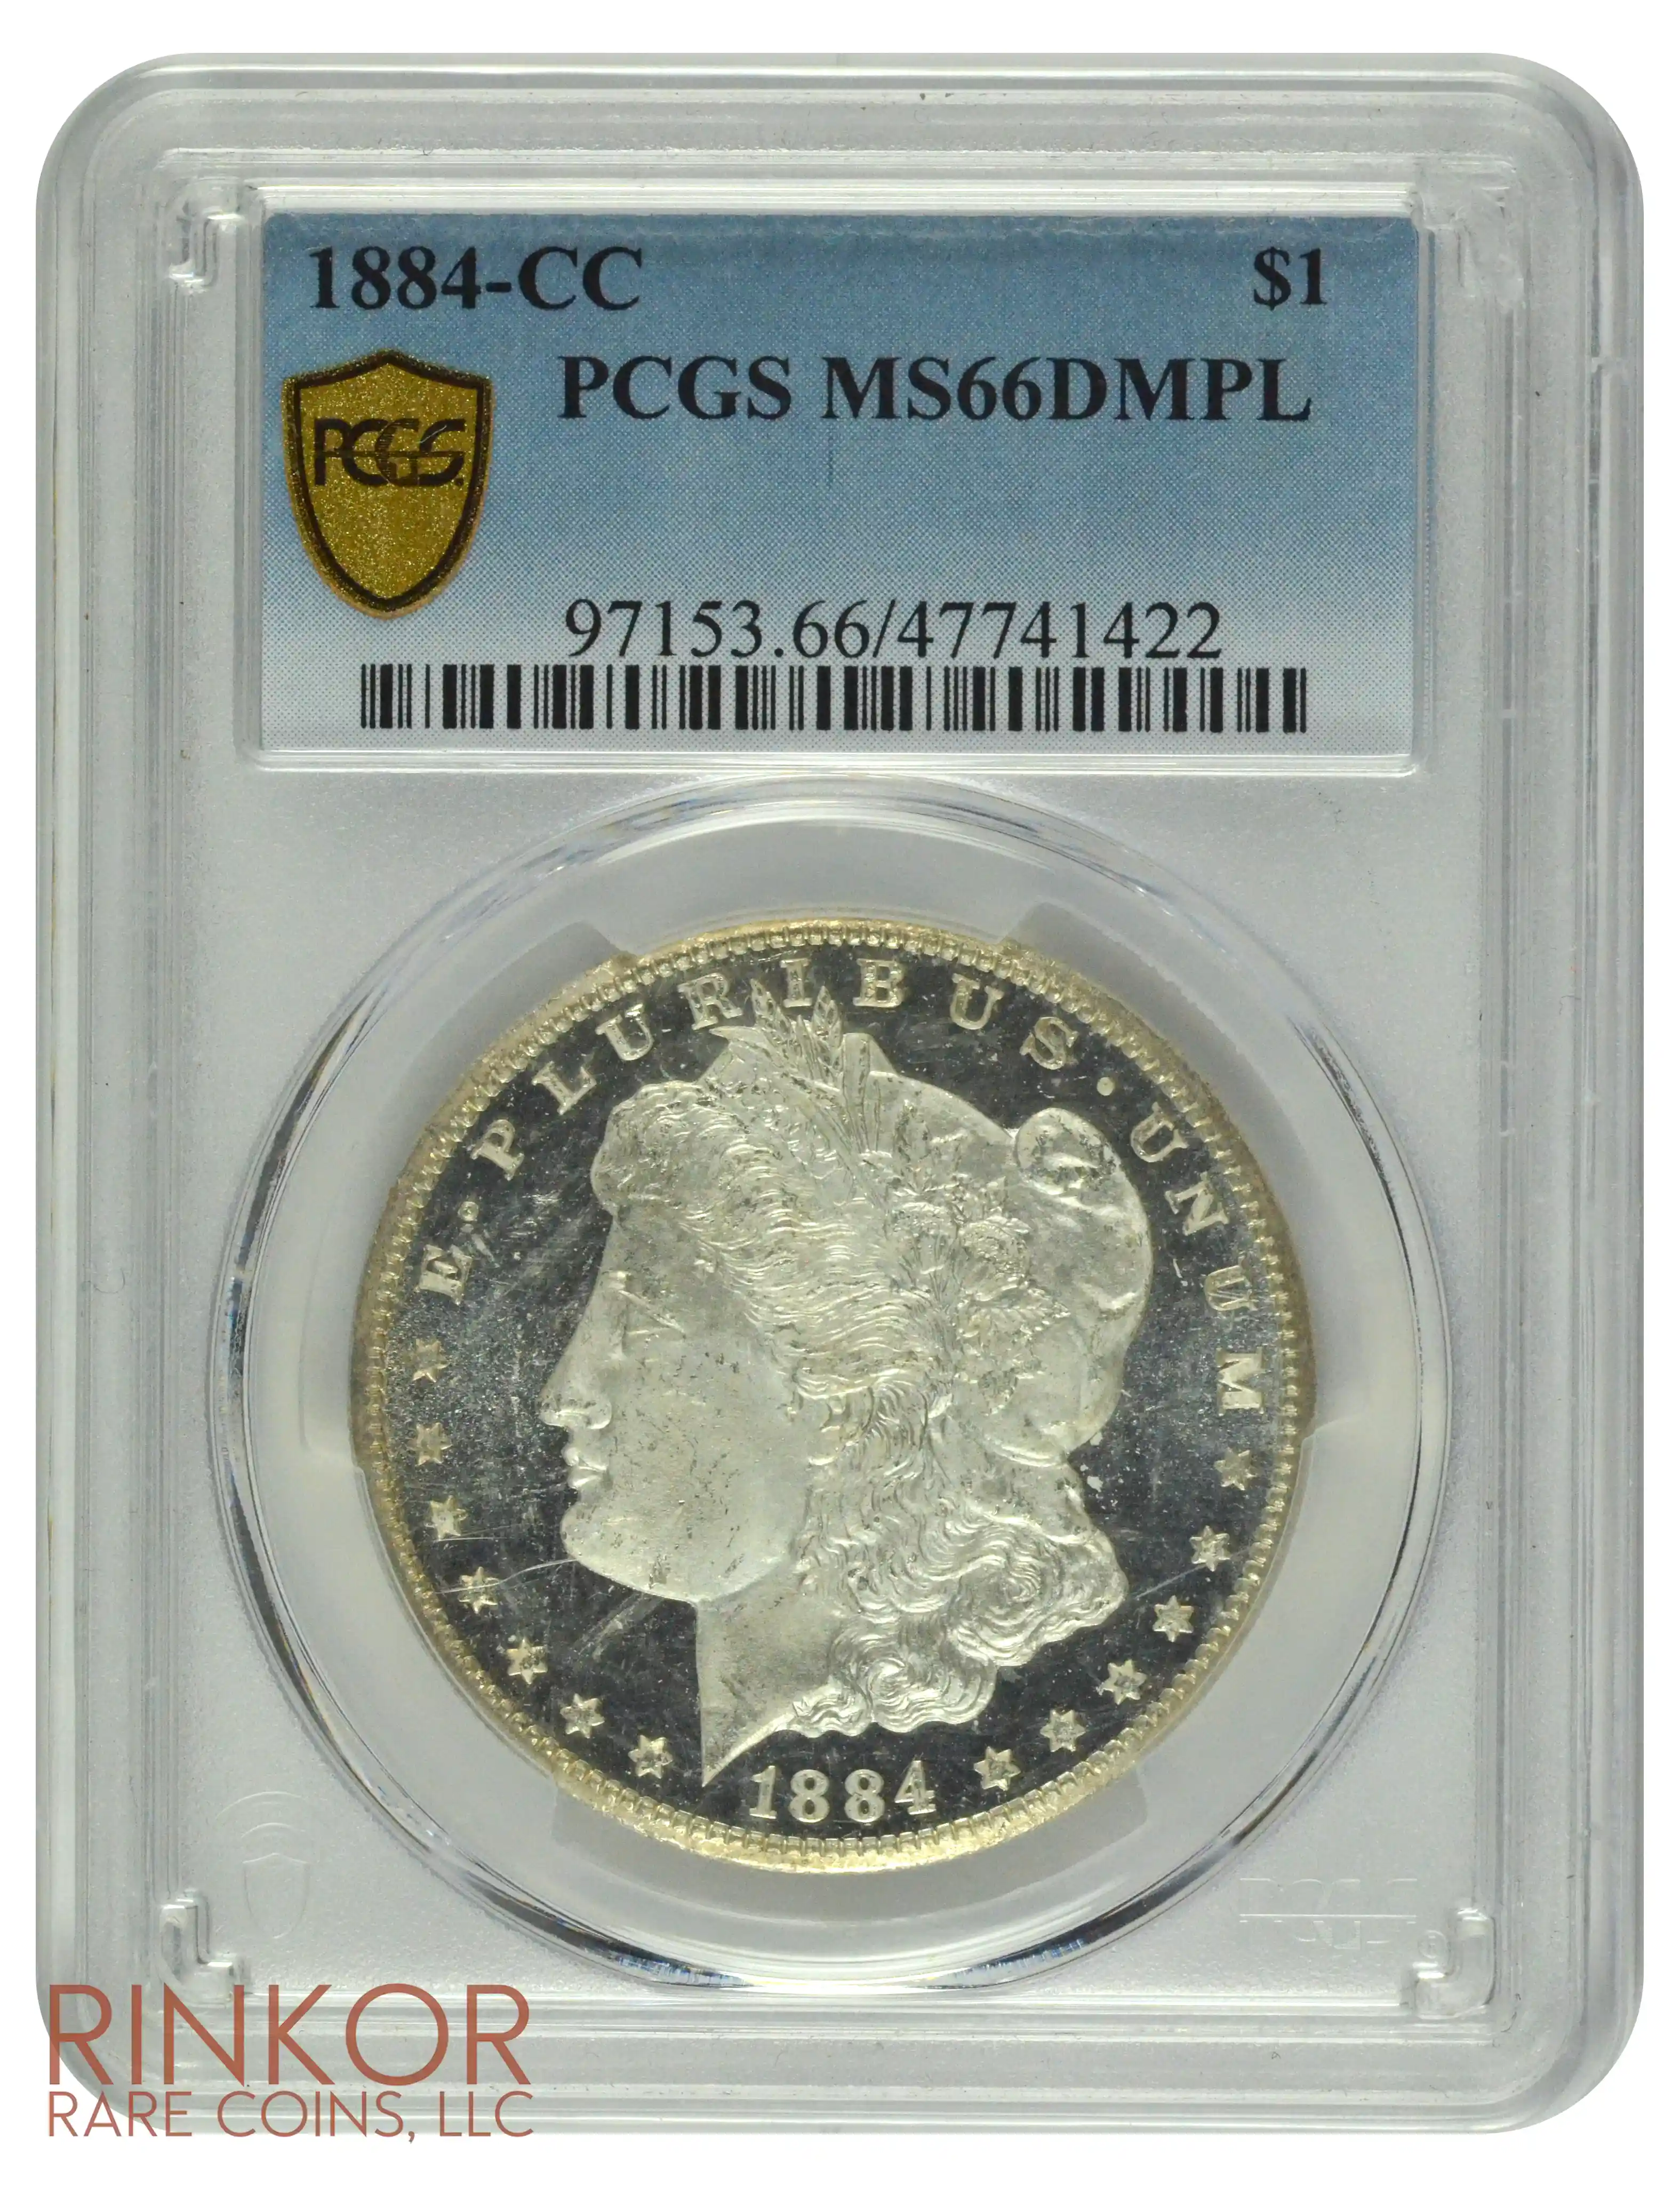 1884-CC $1 PCGS MS 66 DMPL 